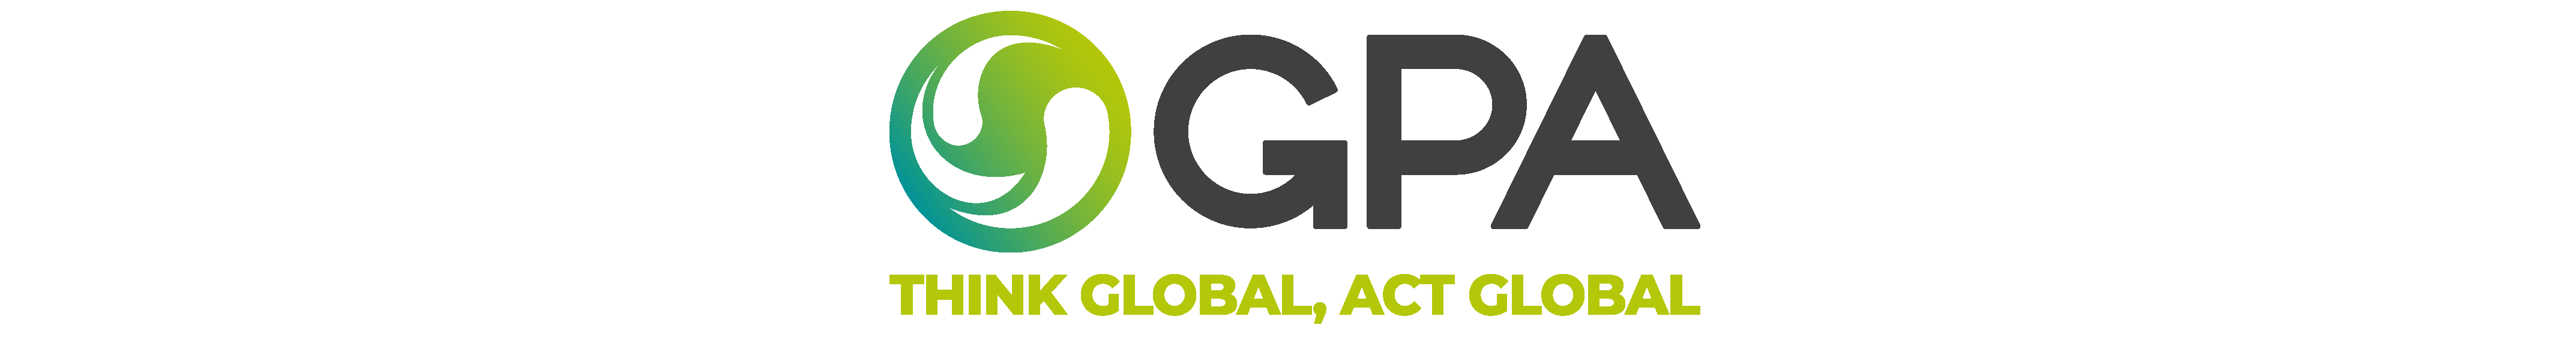 GPA Servicio Global